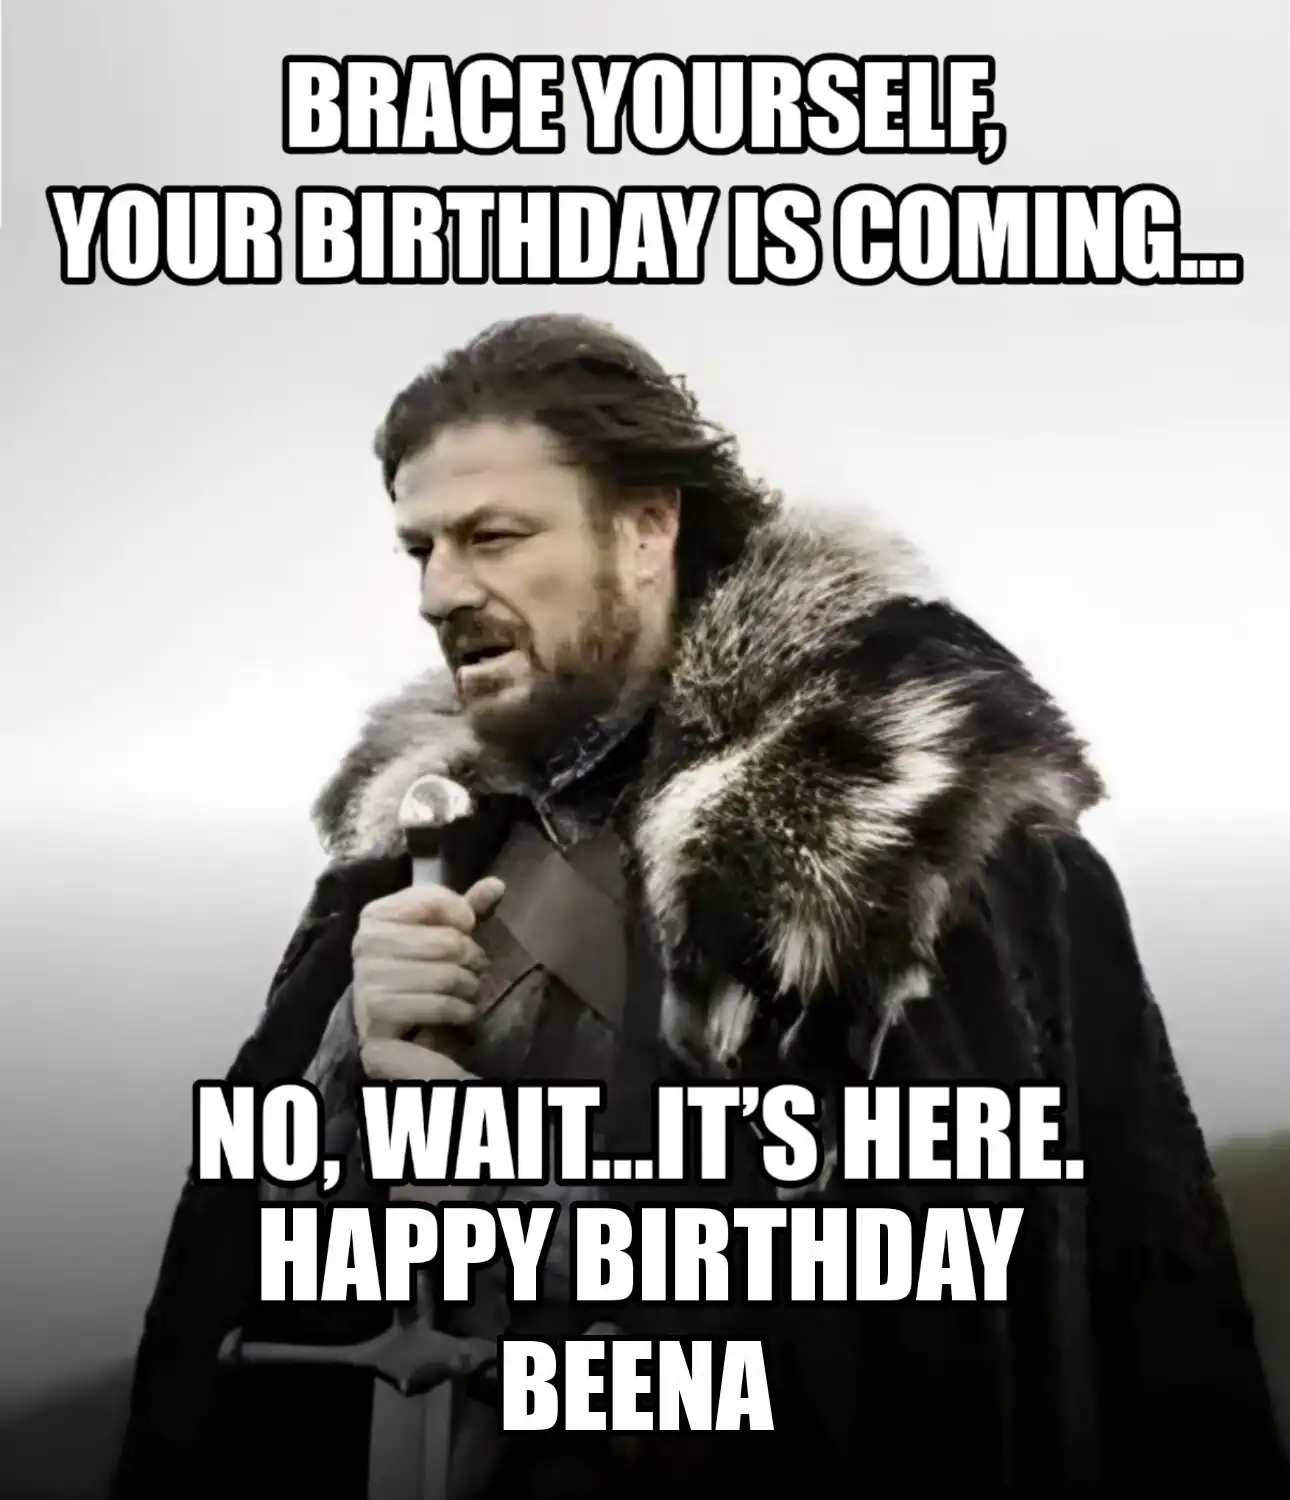 Happy Birthday Beena Brace Yourself Your Birthday Is Coming Meme